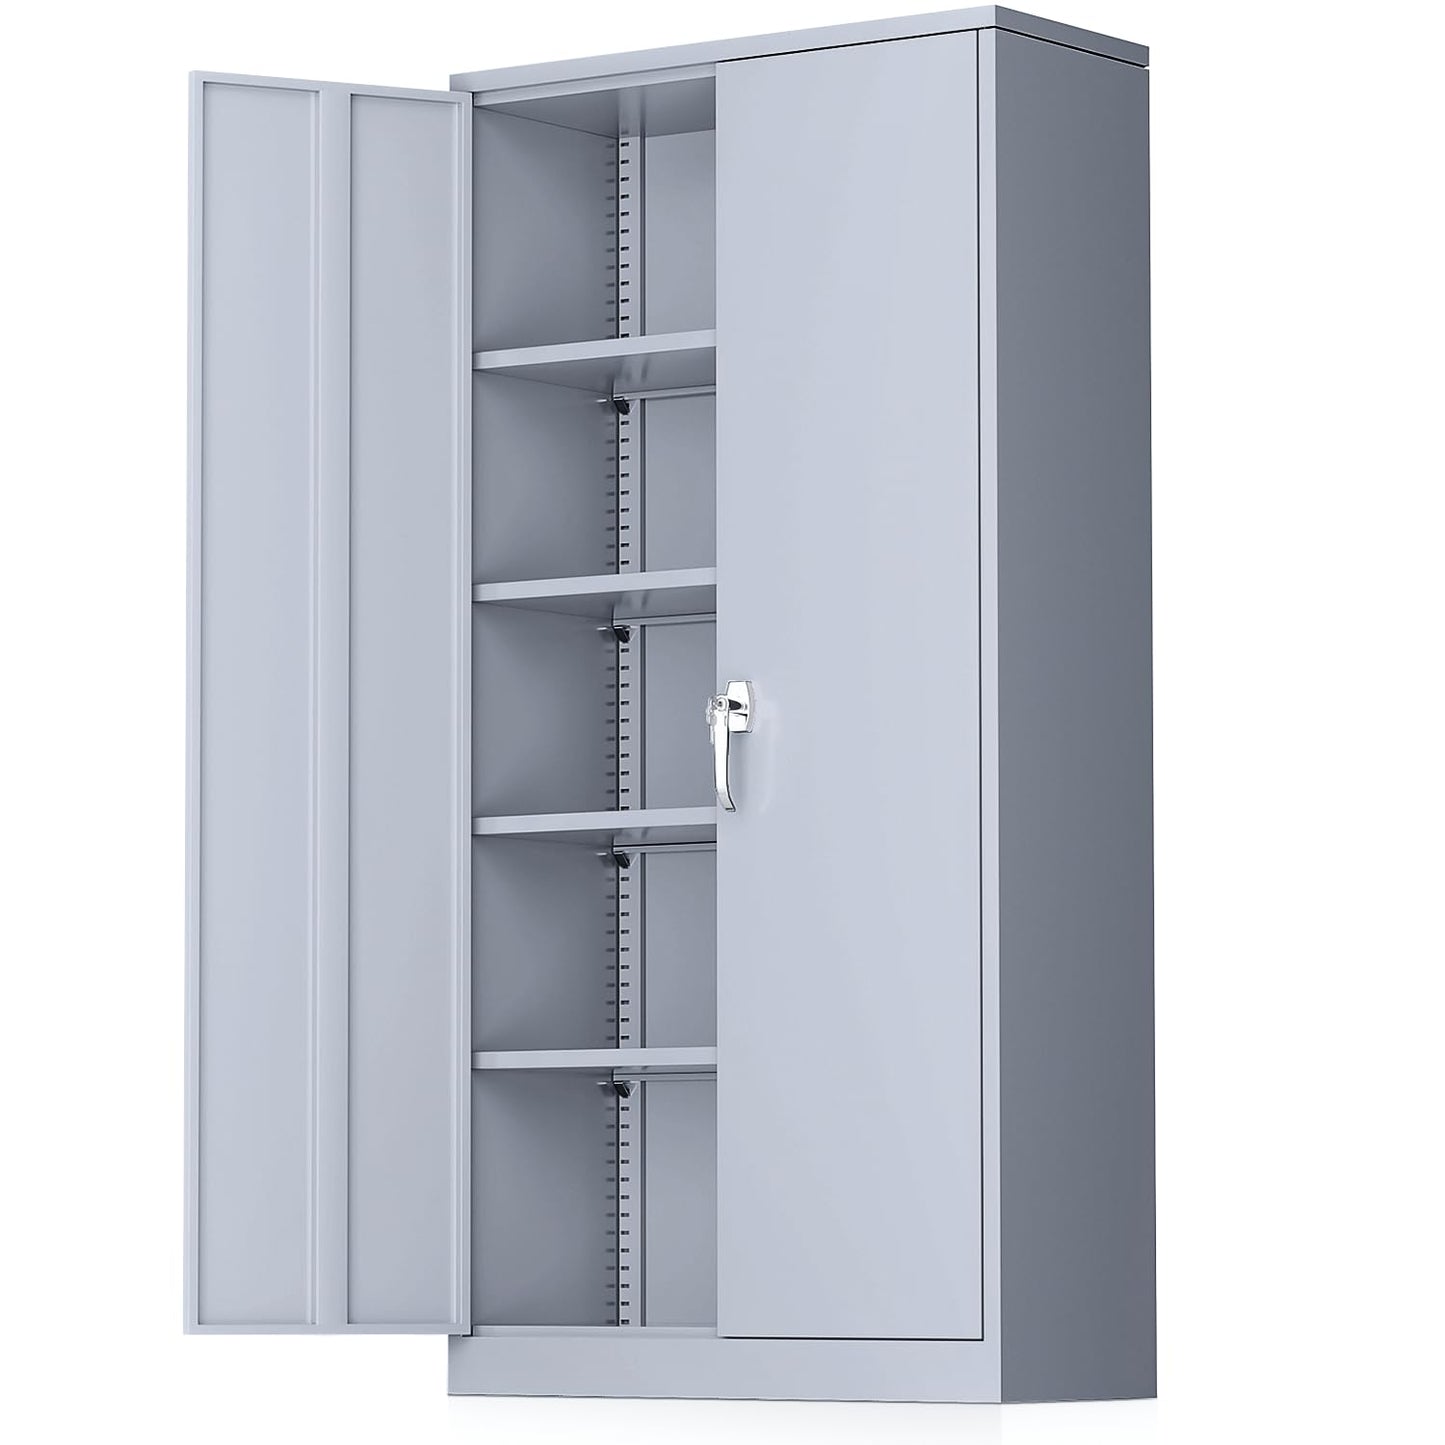 Greenvelly Metal Storage Cabinet, 72" Locking Tool Steel Garage Cabinet with Doors and Adjustable Shelves, Utility Metal Filing Cabinet with Lock for